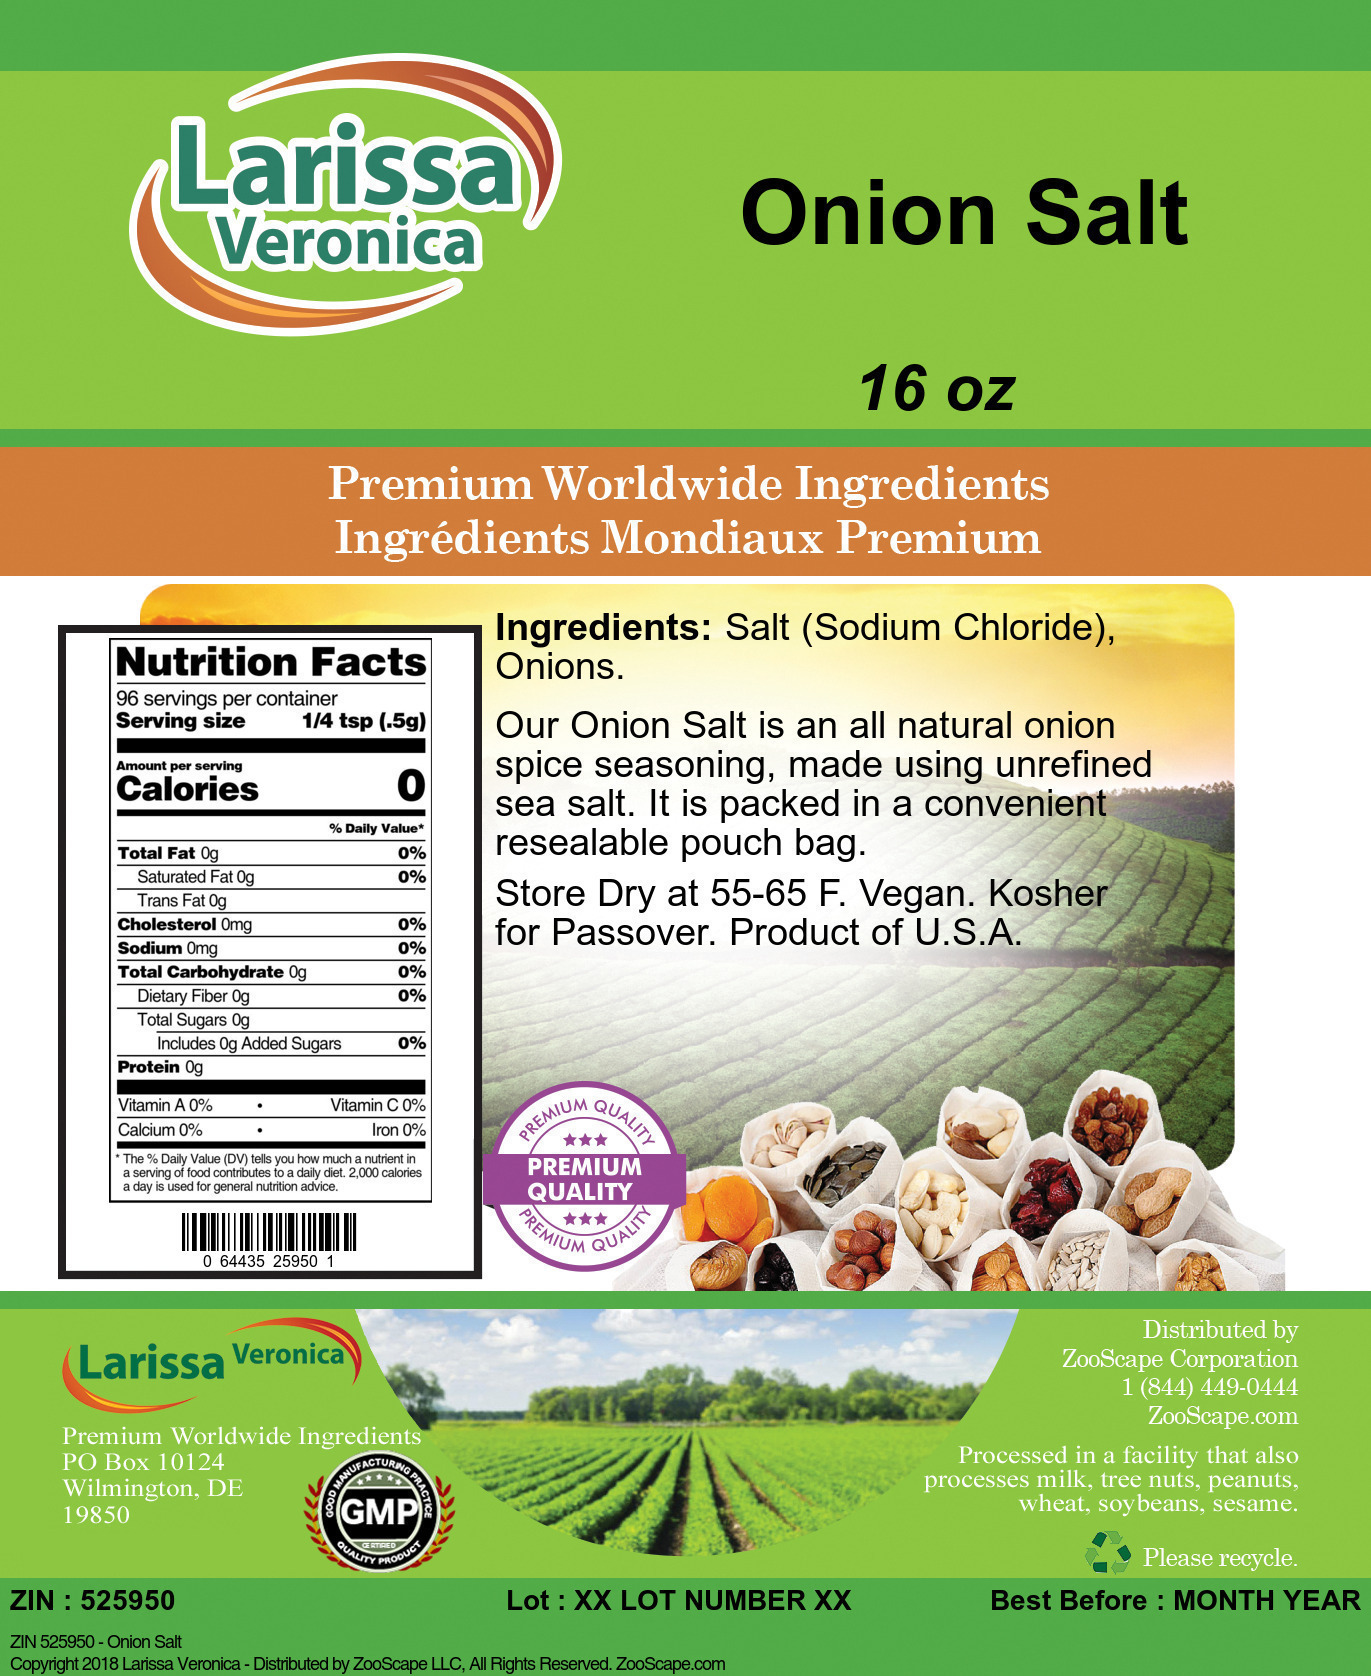 Onion Salt - Label